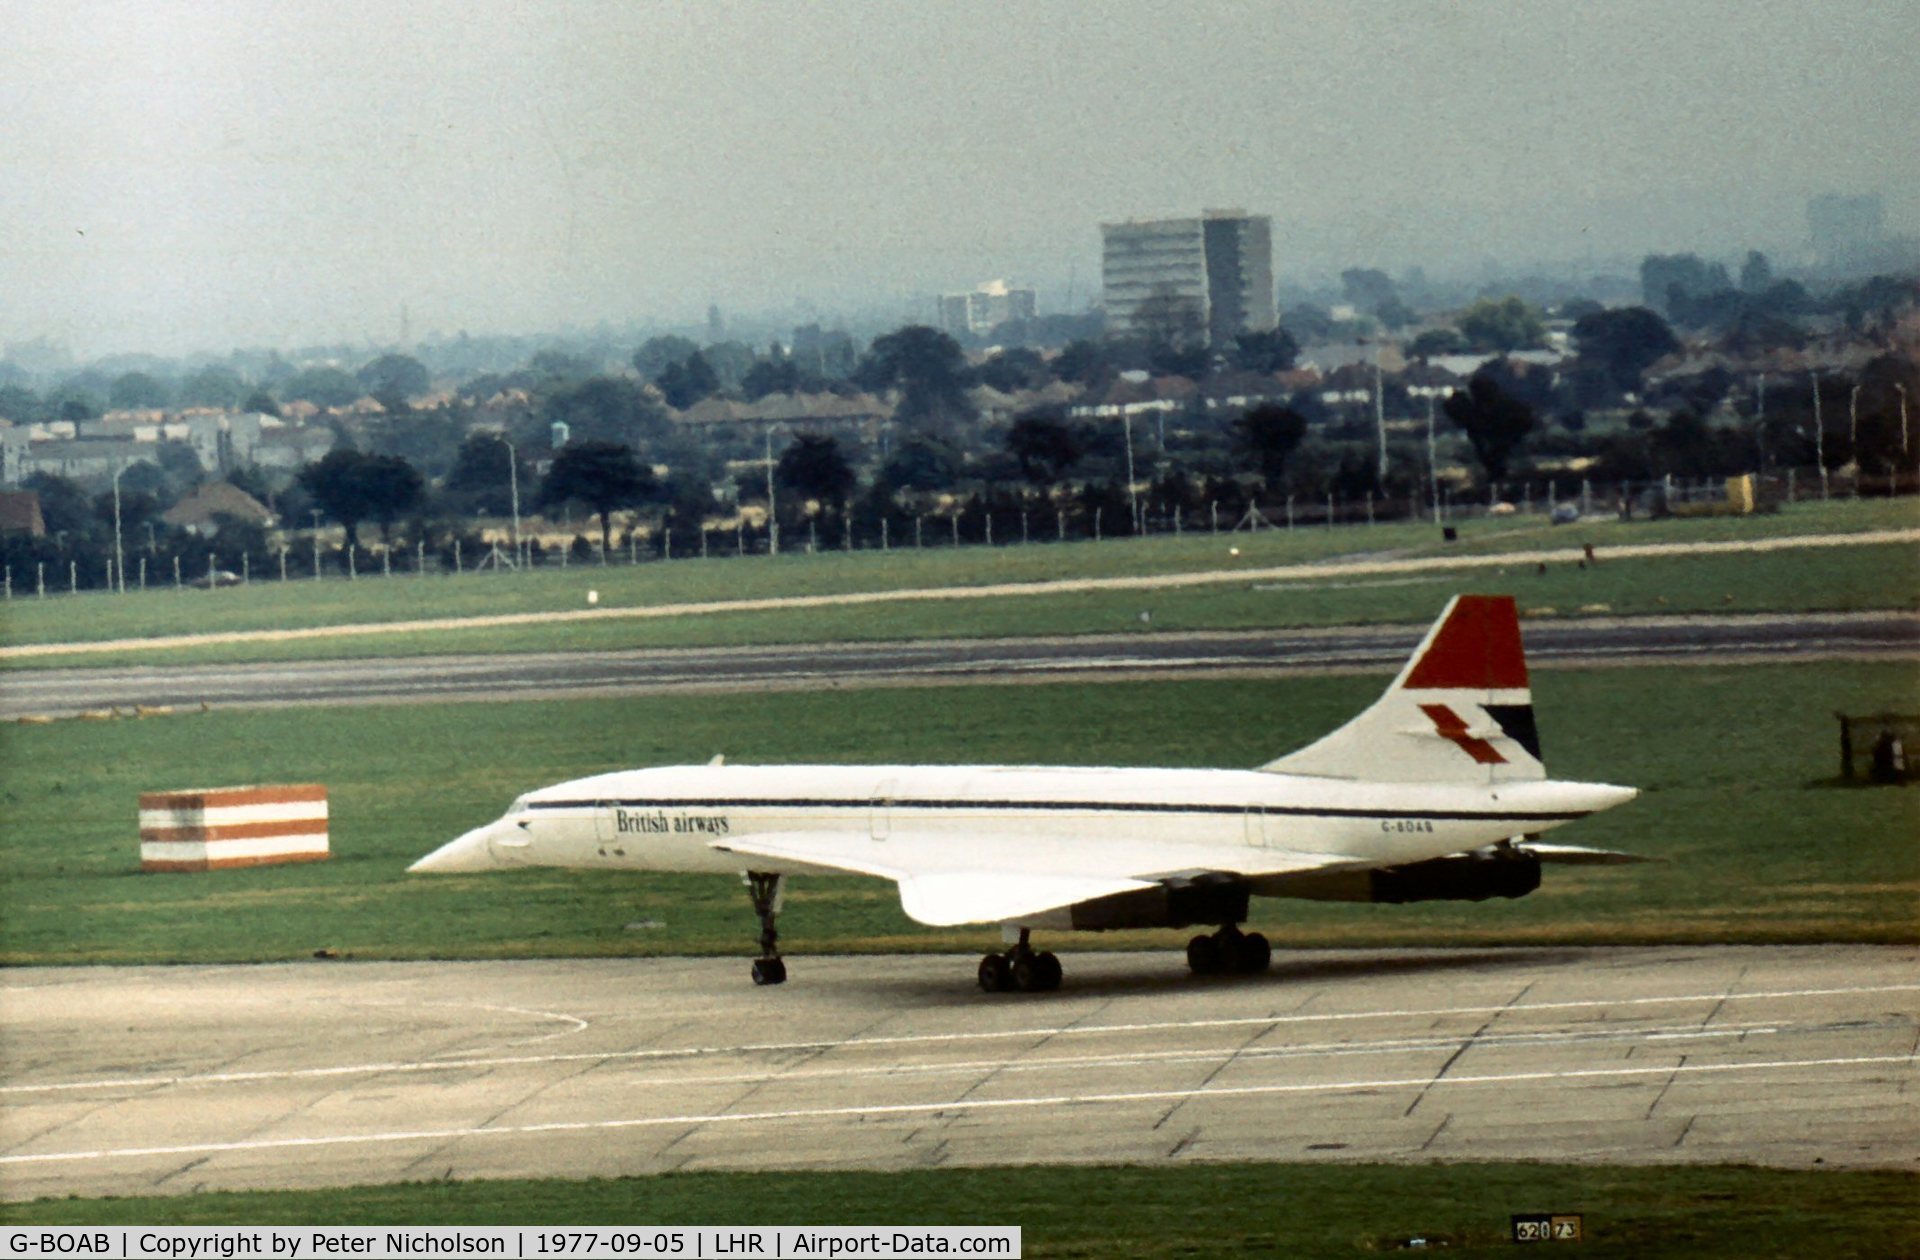 G-BOAB, 1976 Aerospatiale-BAC Concorde 1-102 C/N 100-008, As seen in British Airways service at London Heathrow in the Summer of 1977.